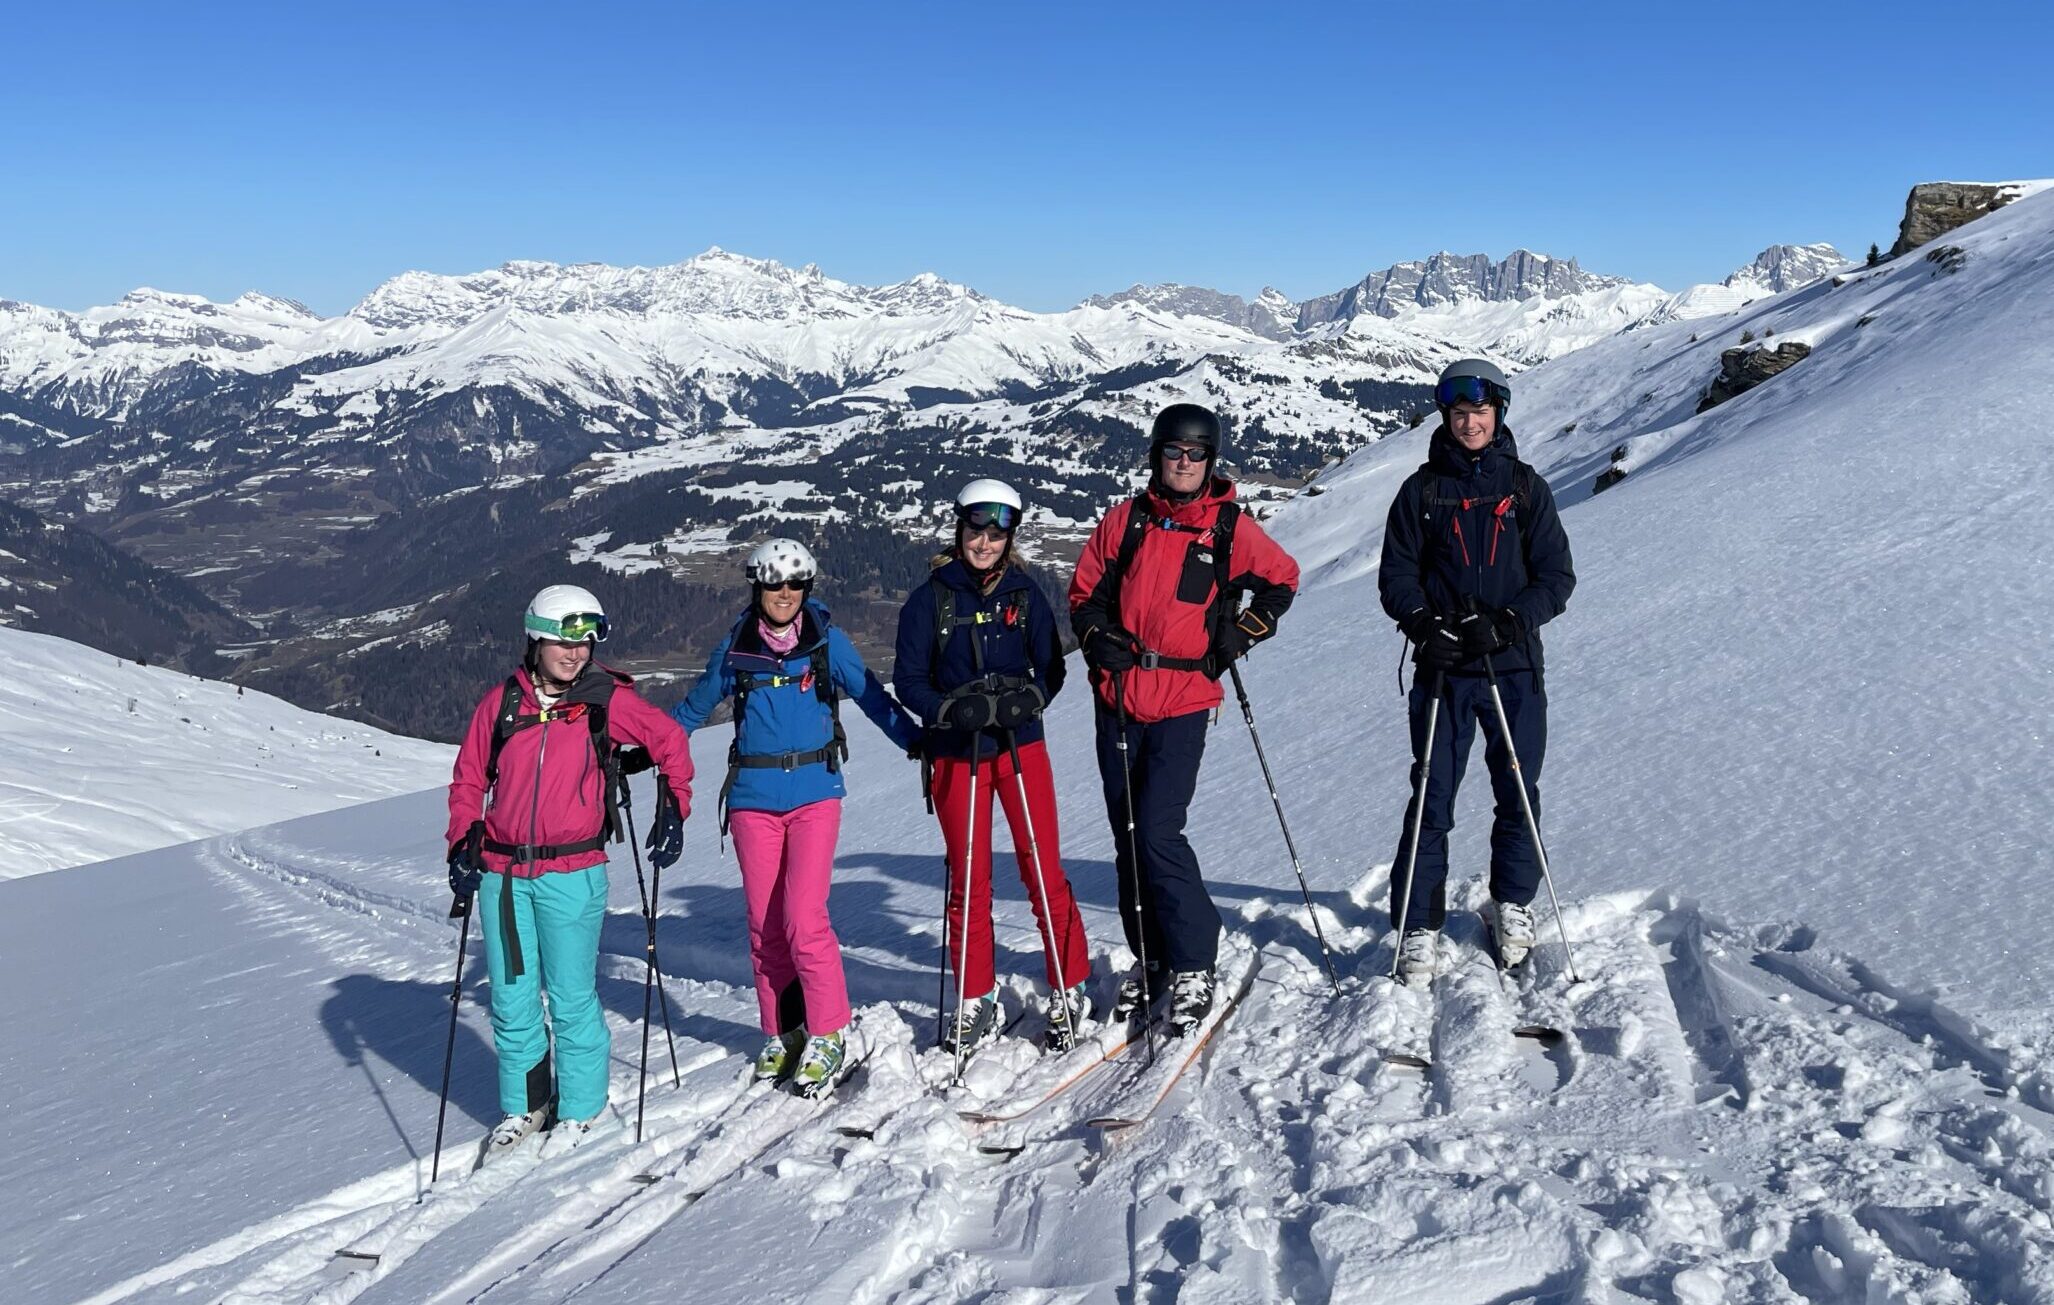 Bergführer, Johnny Müller, peakdreams, happy guests, ski touring, guidelife, offpiste, freeride, safety first, fresh tracks, Andermatt, UIAGM, Switzerland